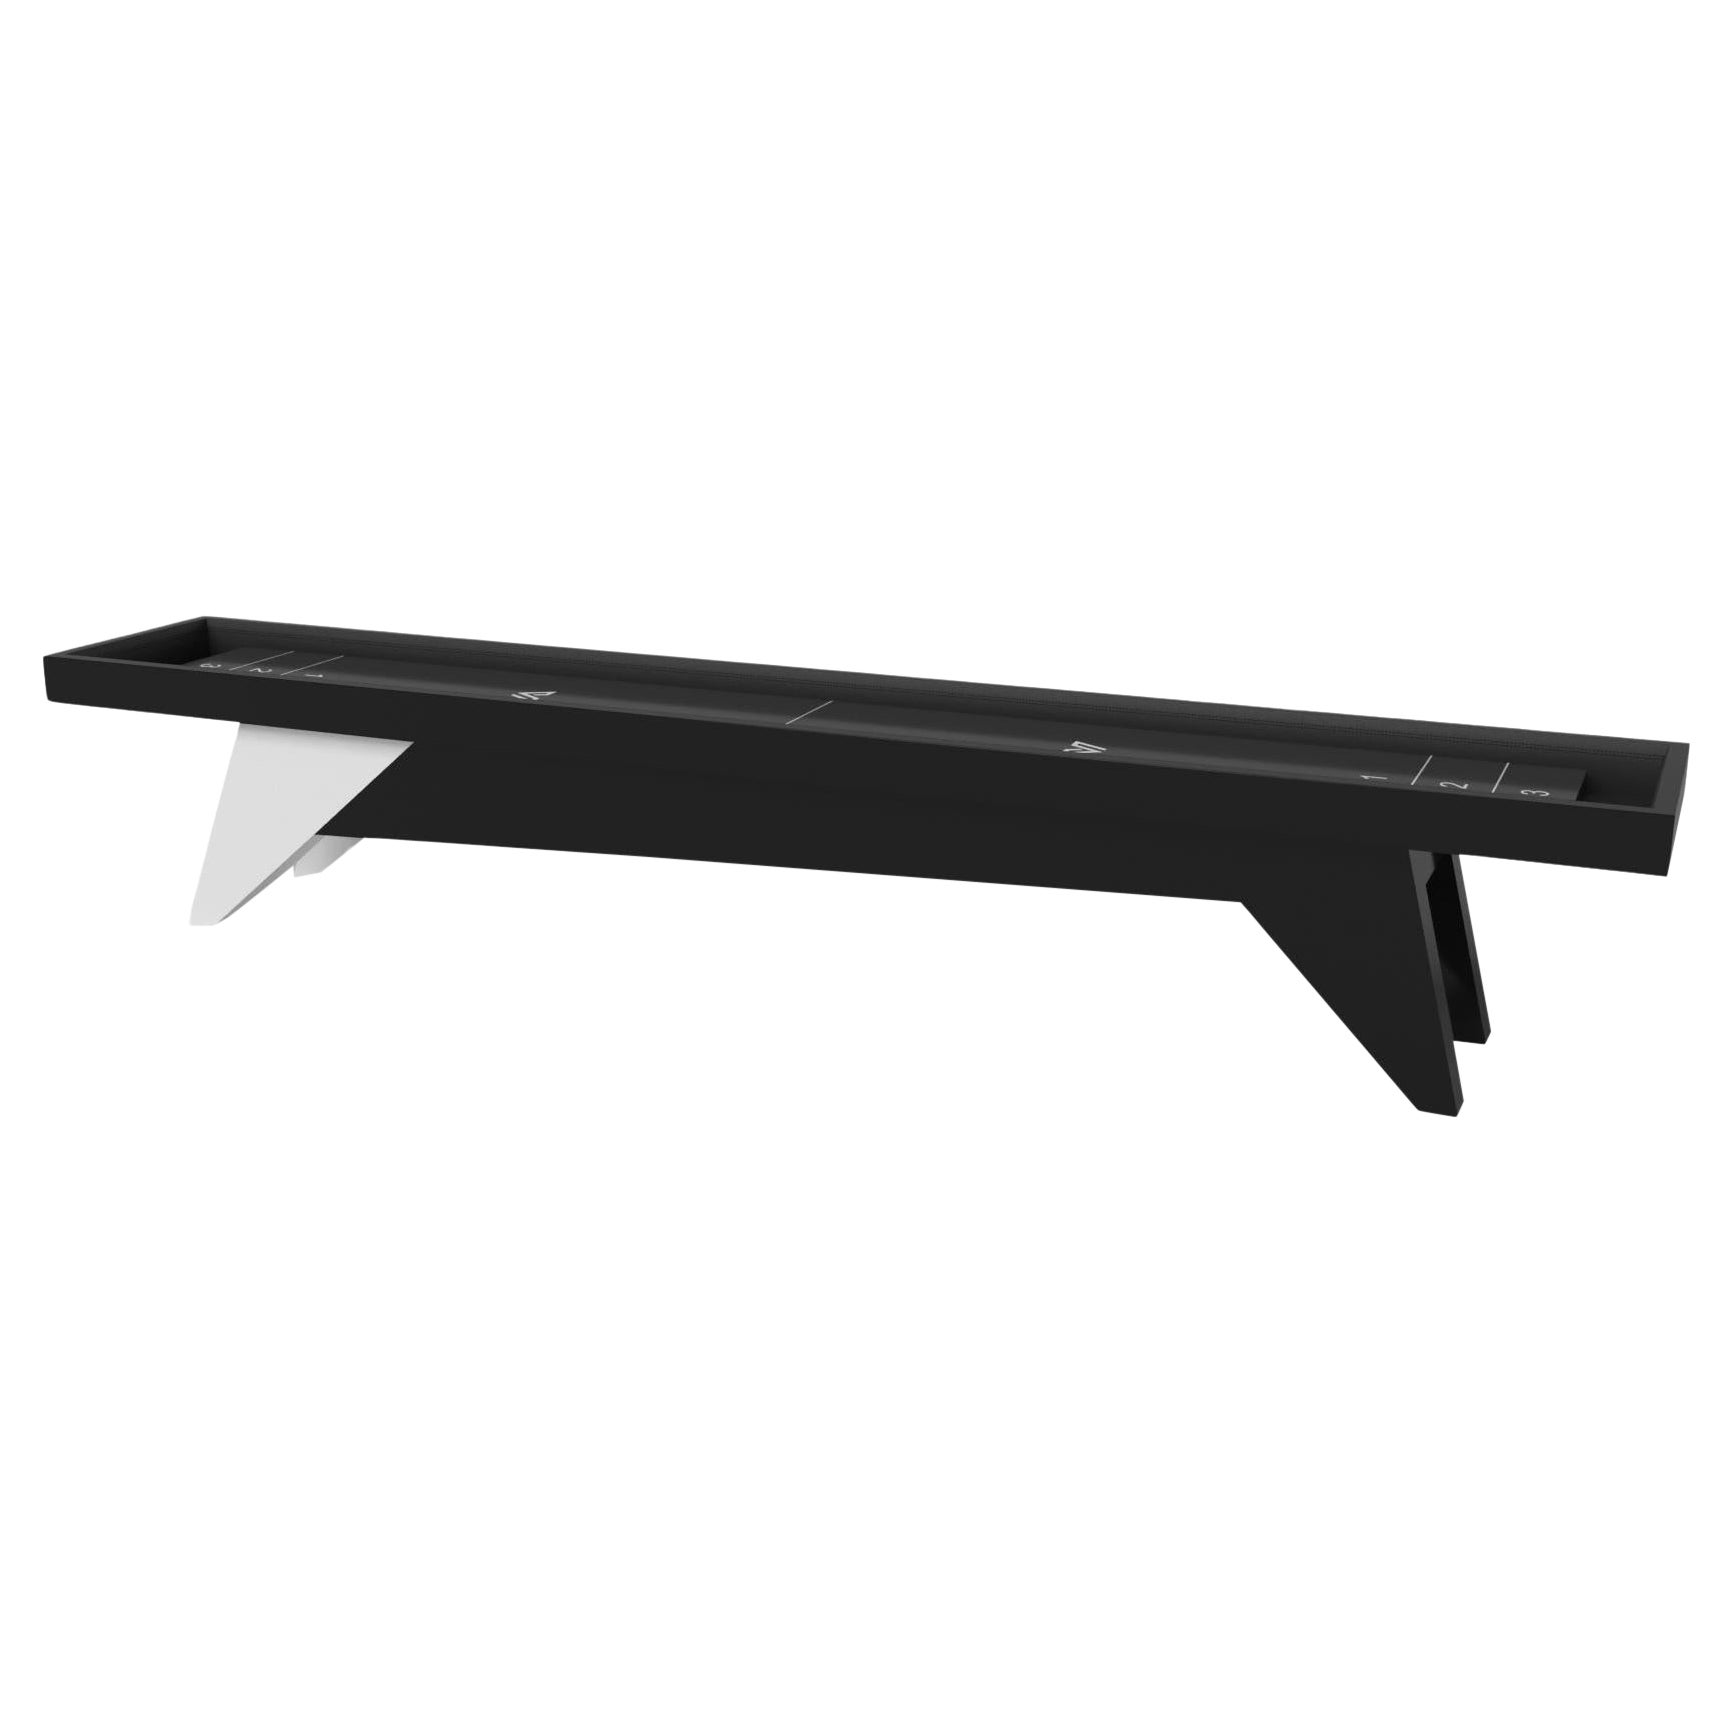 Elevate Customs Mantis Shuffleboard Tables/Solid Pantone Black Color in 12' -USA